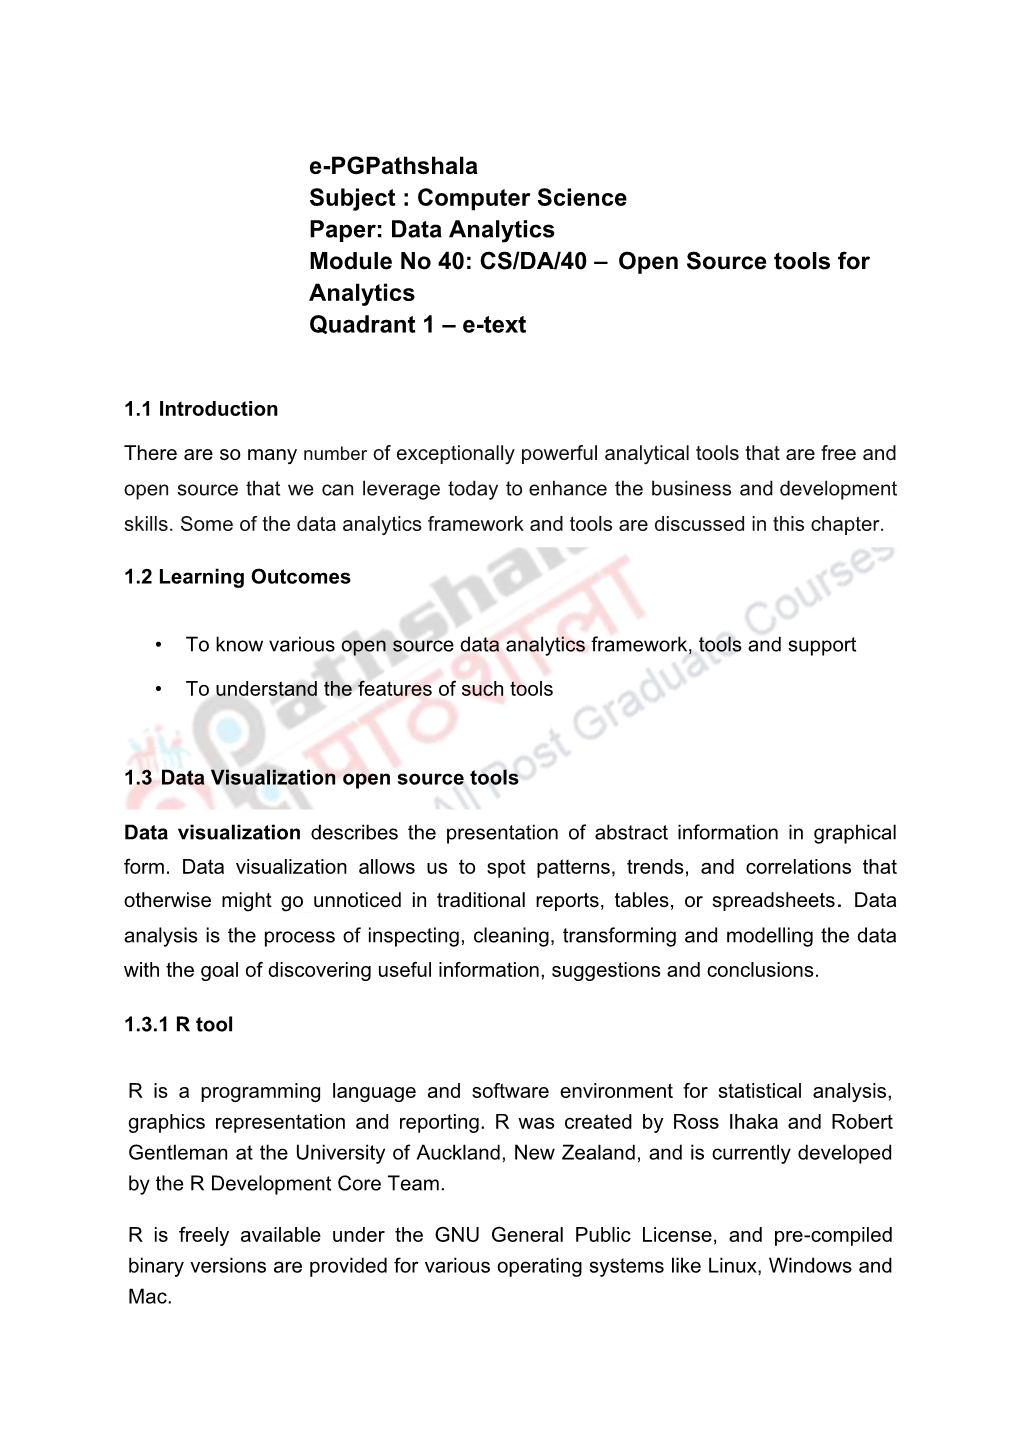 Computer Science Paper: Data Analytics Module No 40: CS/DA/40 – Open Source Tools for Analytics Quadrant 1 – E-Text